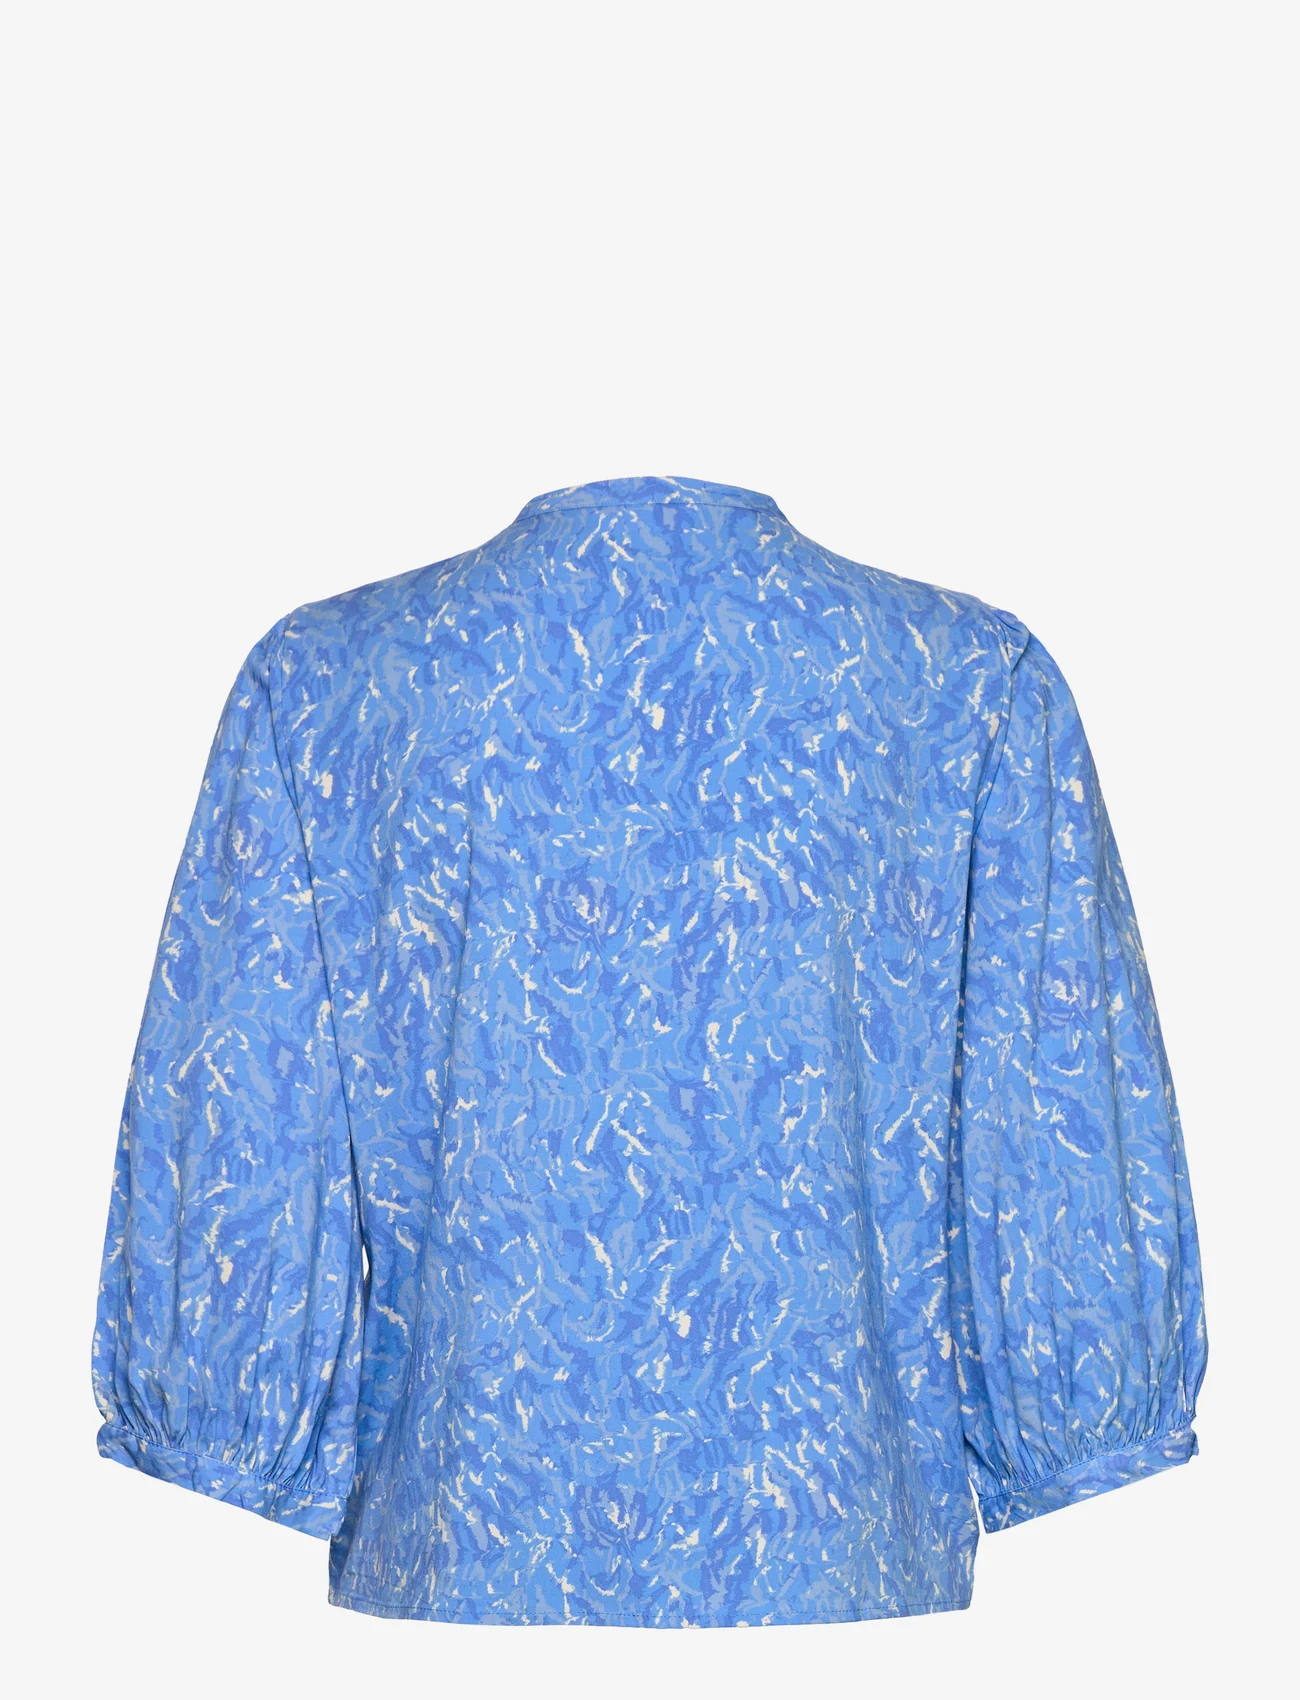 Soft Rebels - SRBriella Elma Shirt - pitkähihaiset puserot - graphic animal azure blue print - 1